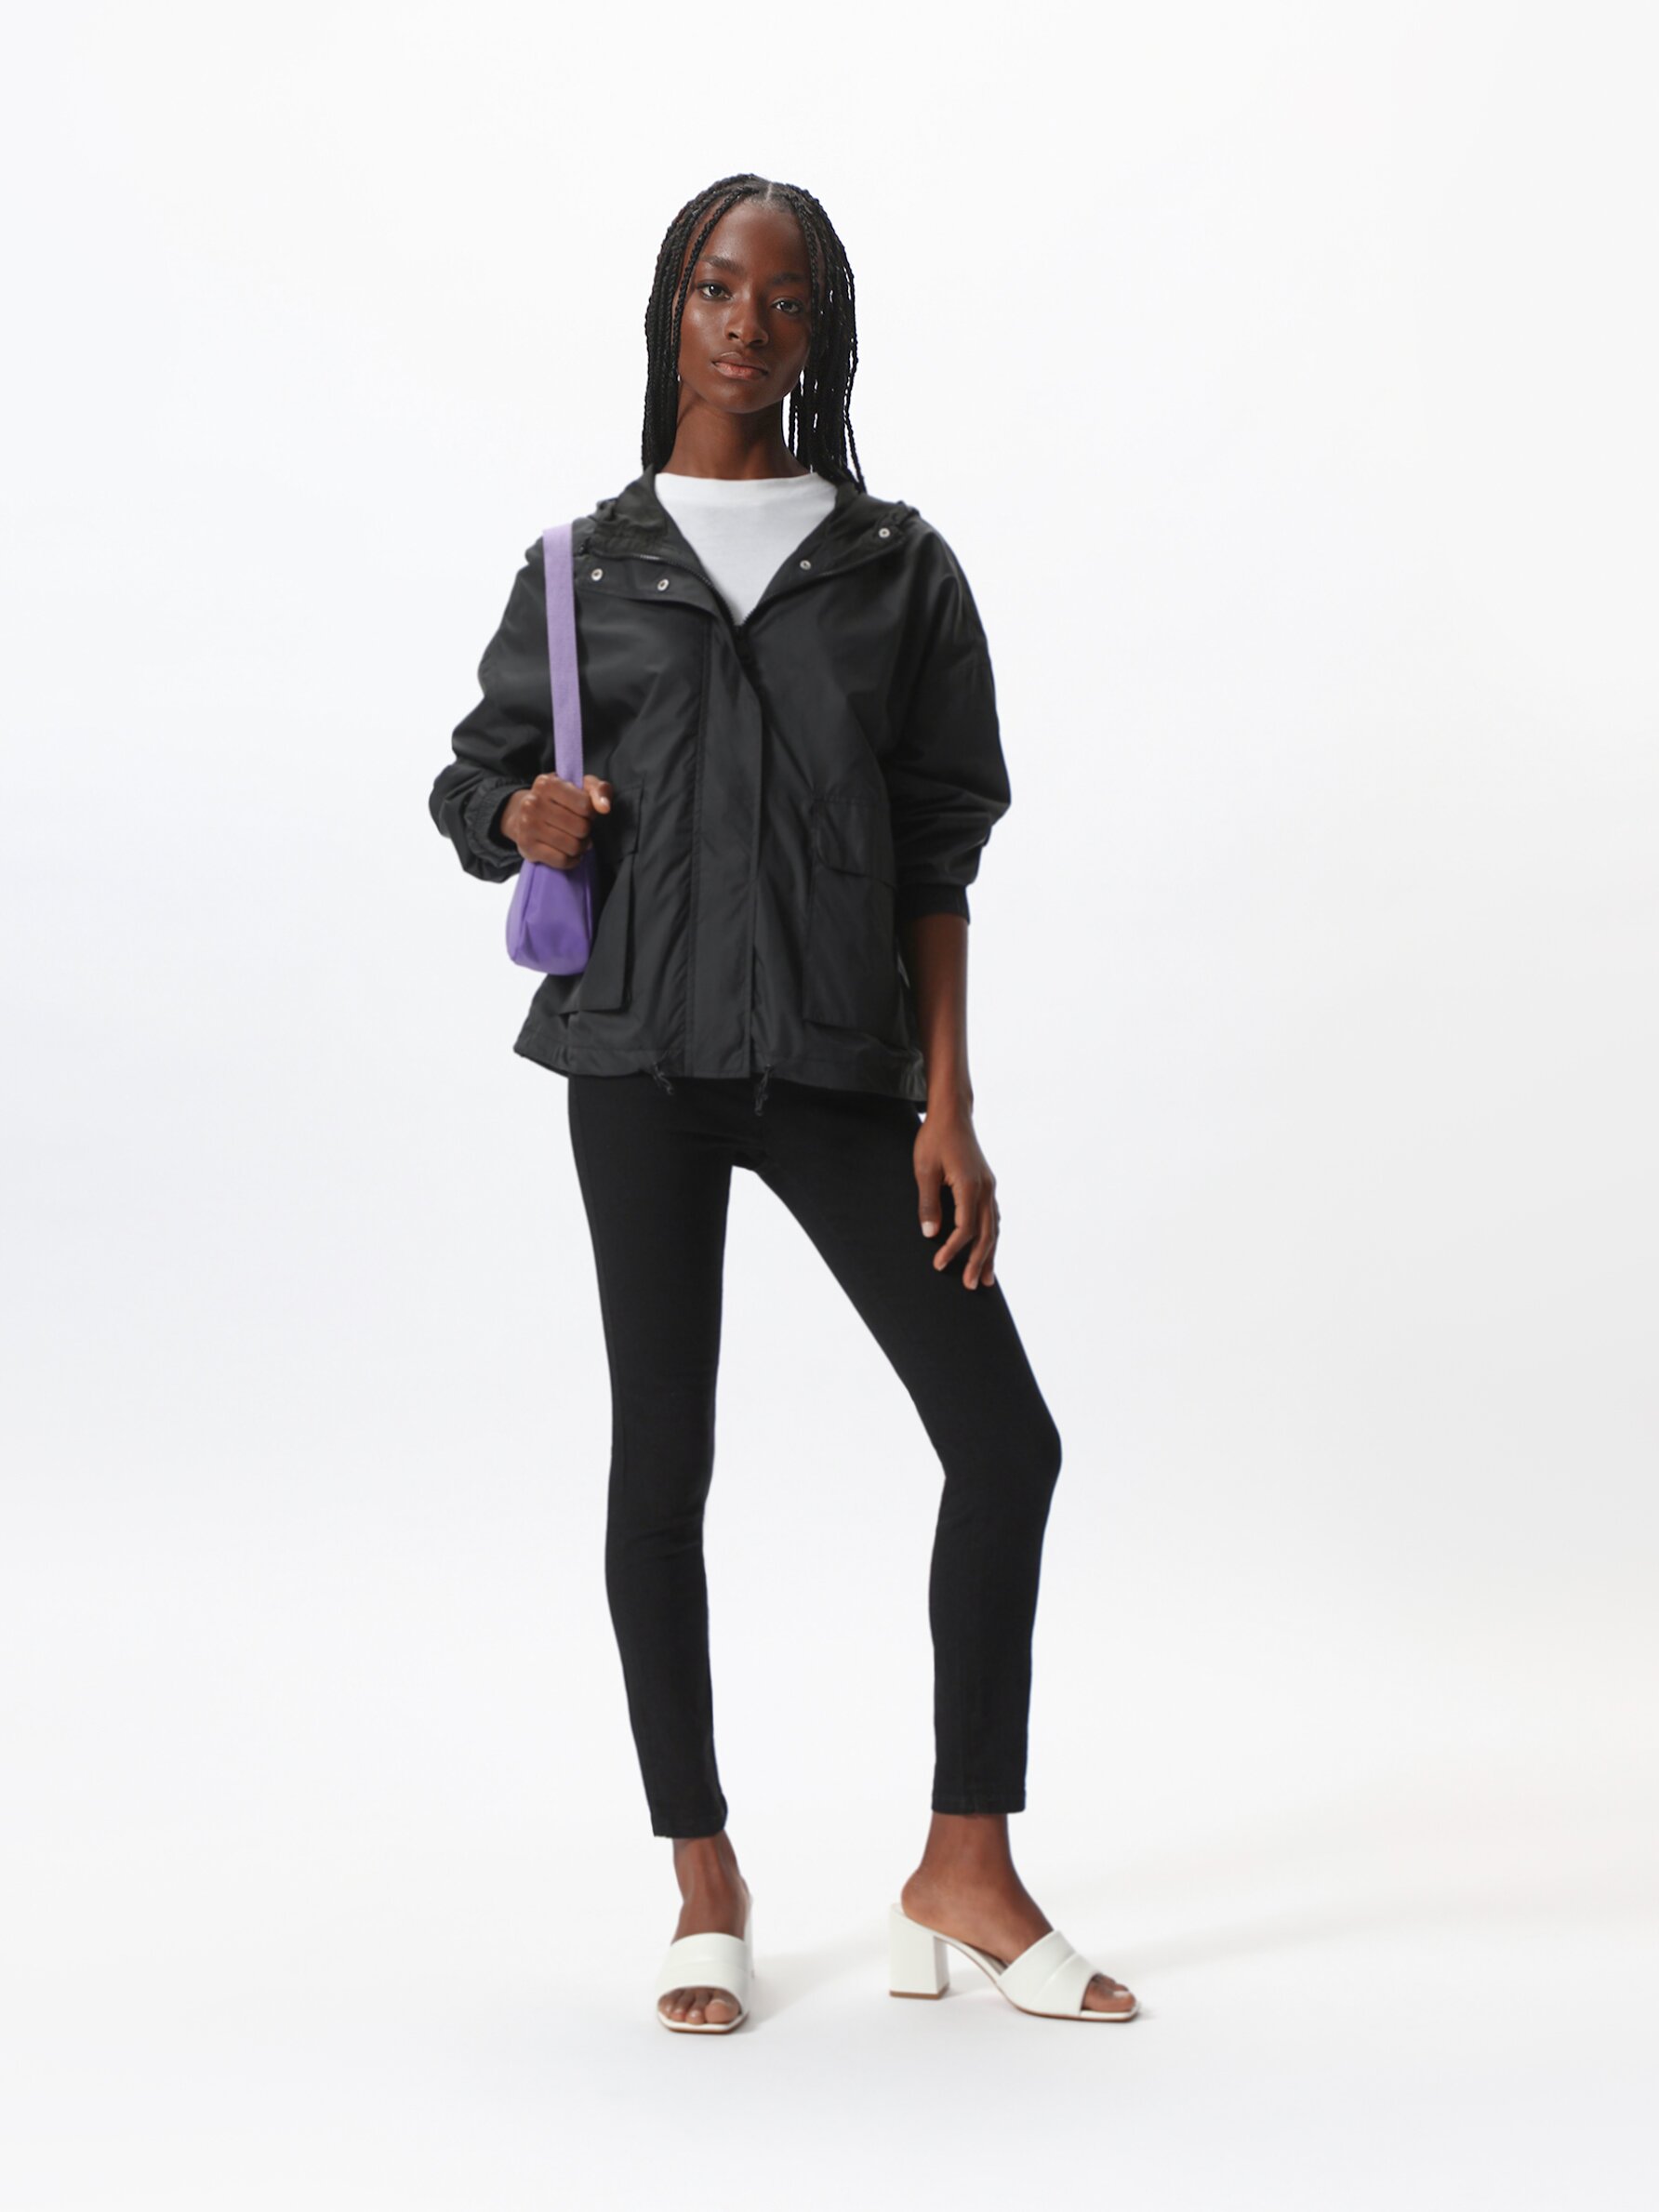 Clothing & Shoes - Jackets & Coats - Lightweight Jackets